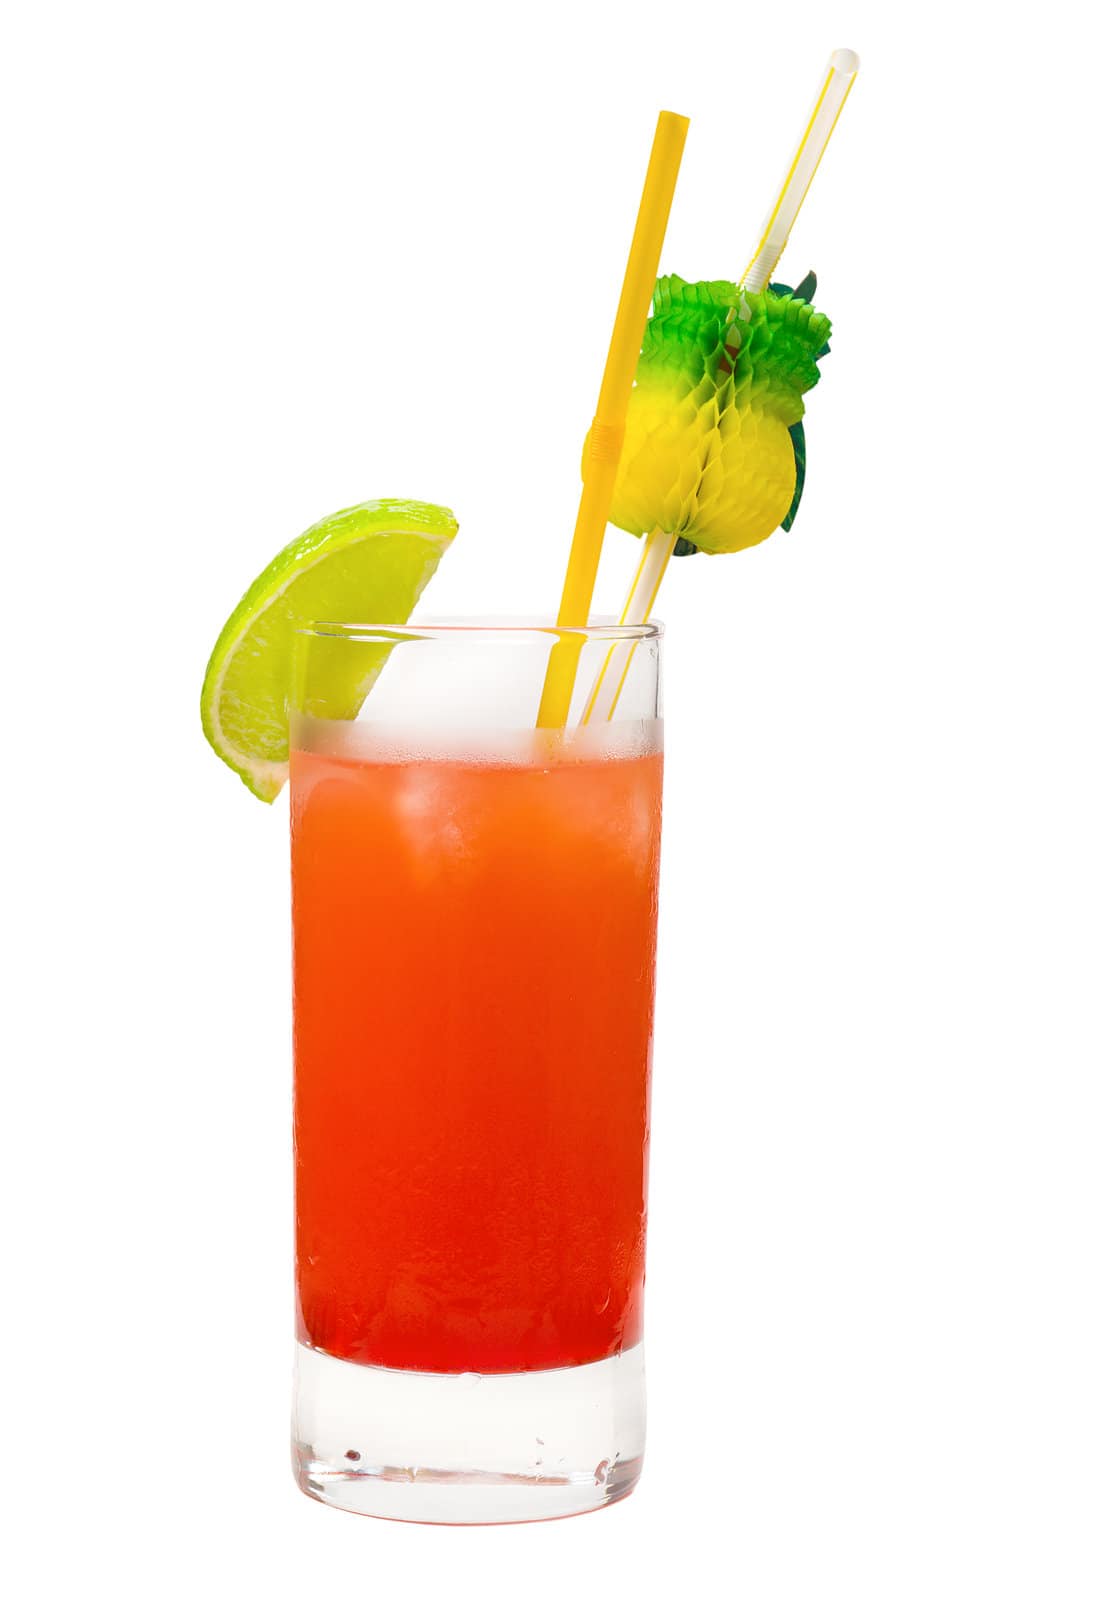 Planter's Punch (Jamaica) cocktail